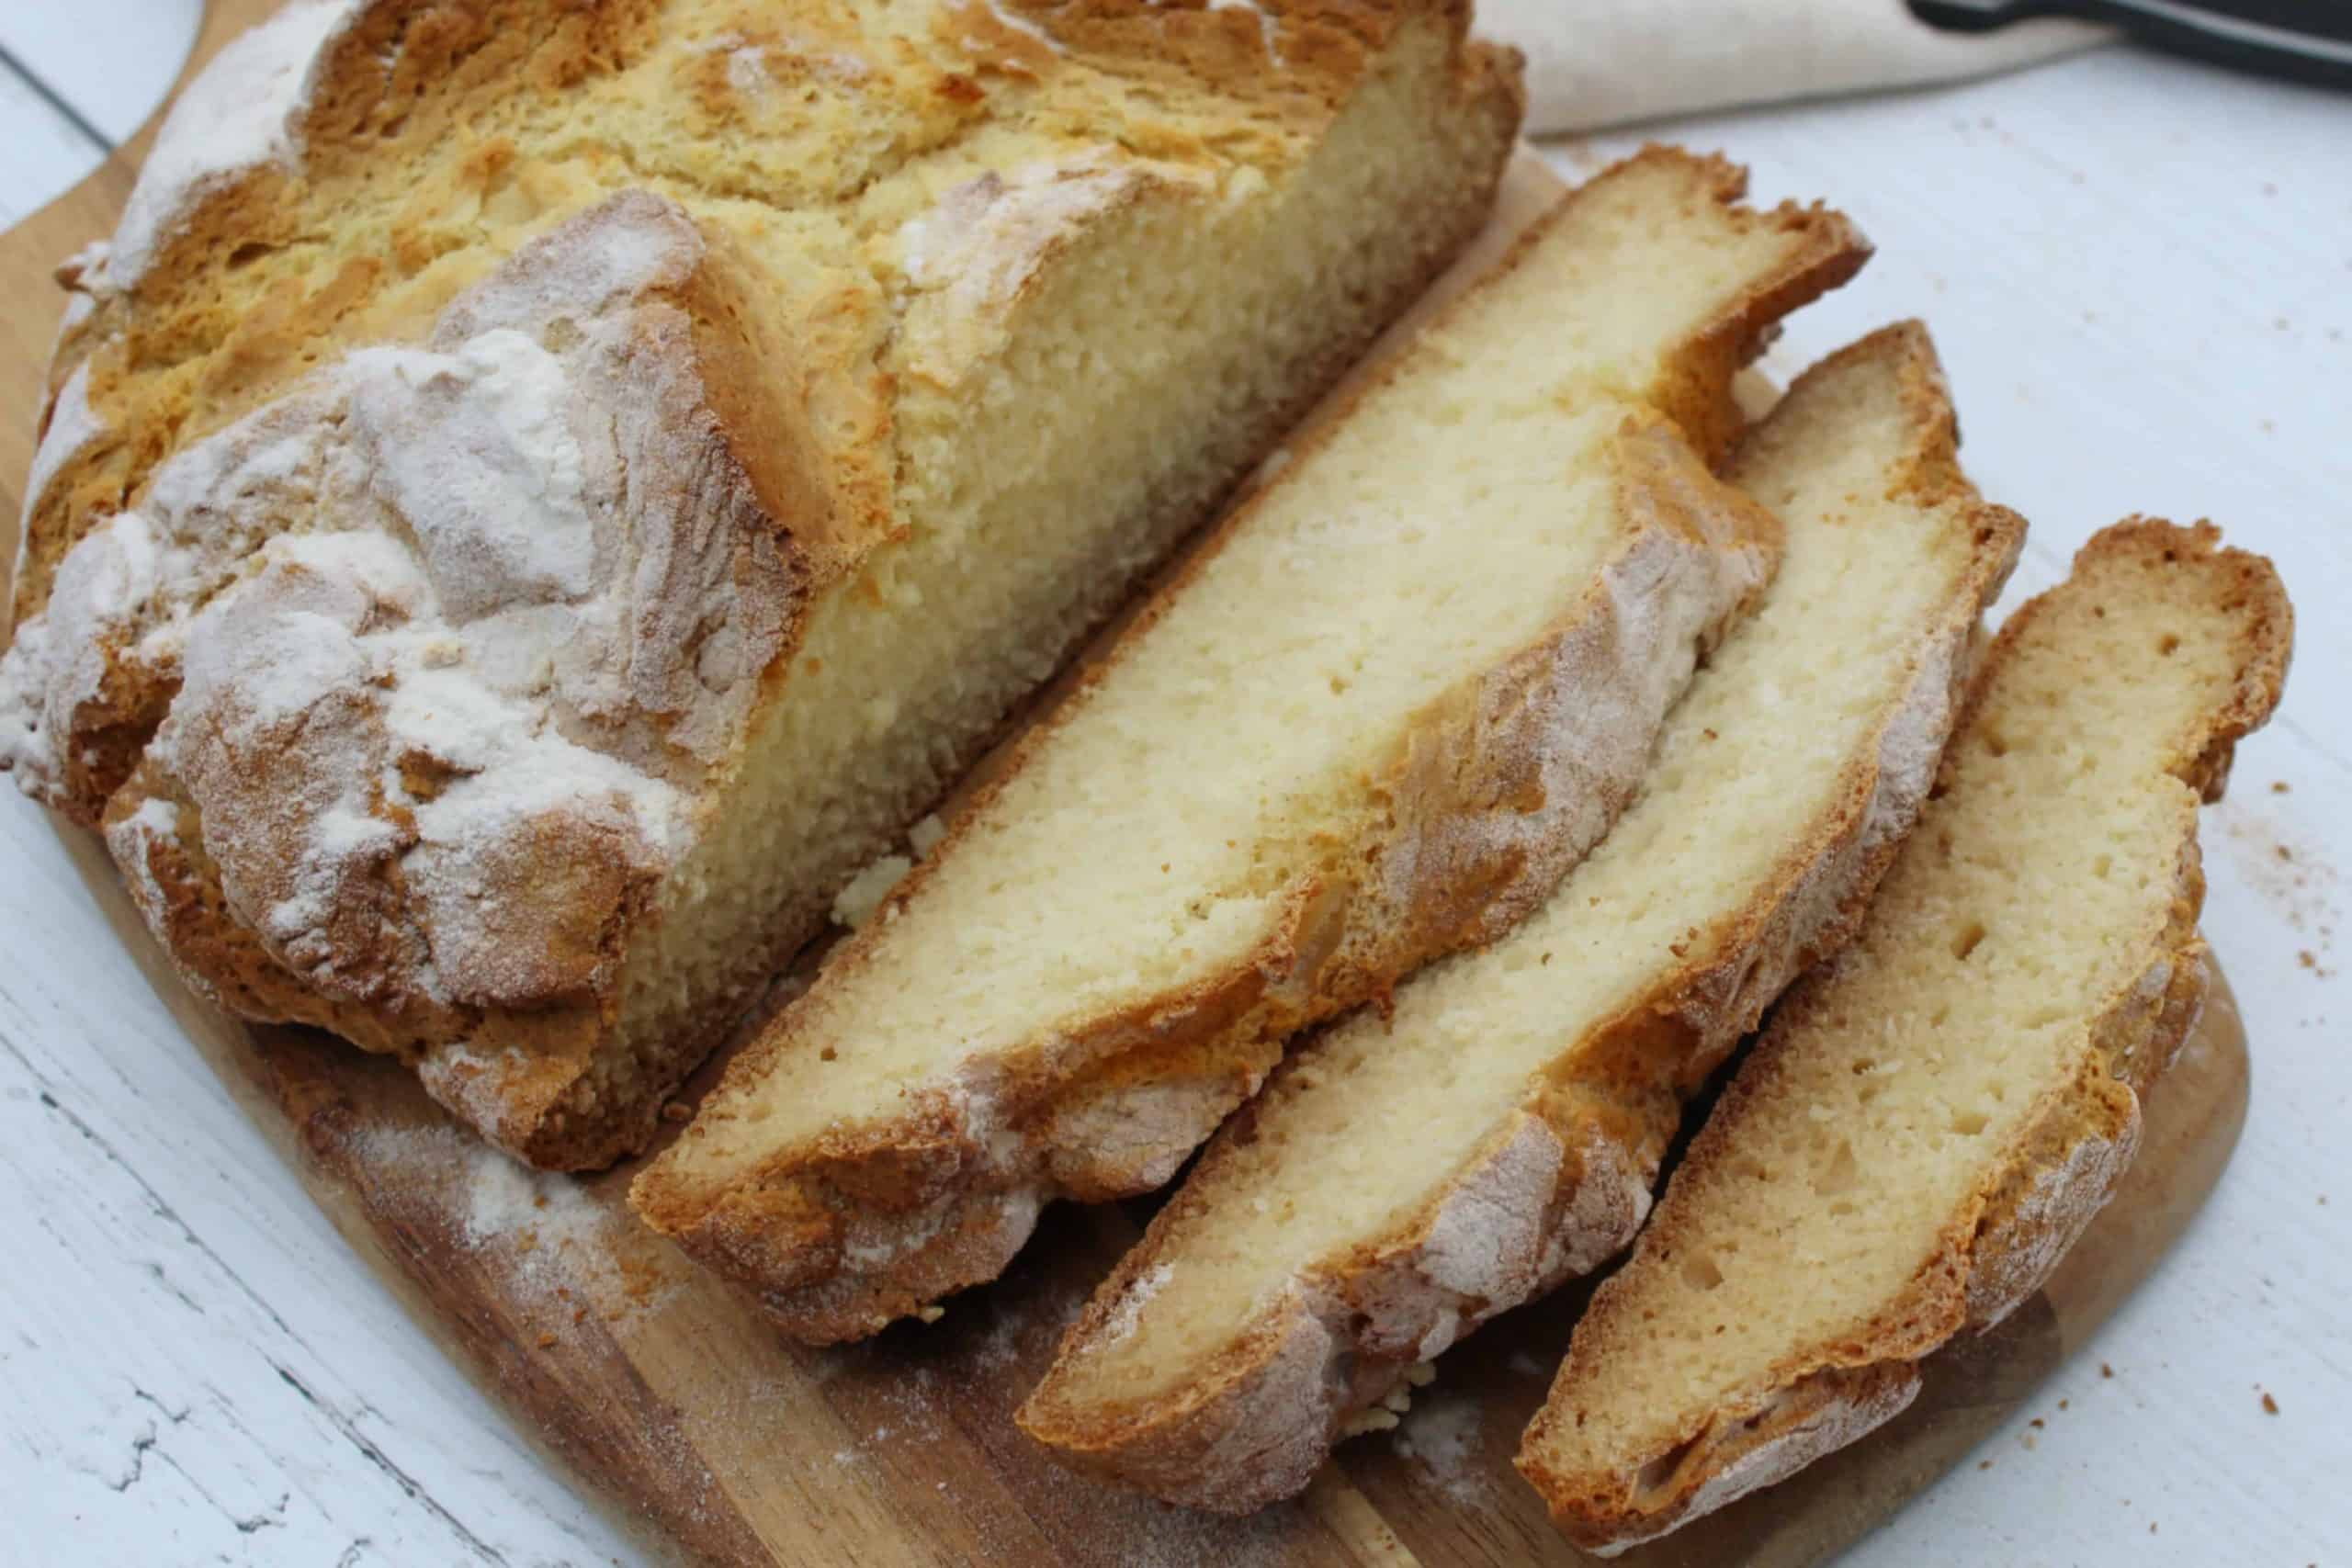 https://www.theglutenfreeblogger.com/wp-content/uploads/2020/04/gluten-free-soda-bread-yeast-free-recipe-121-crop-scaled.jpg